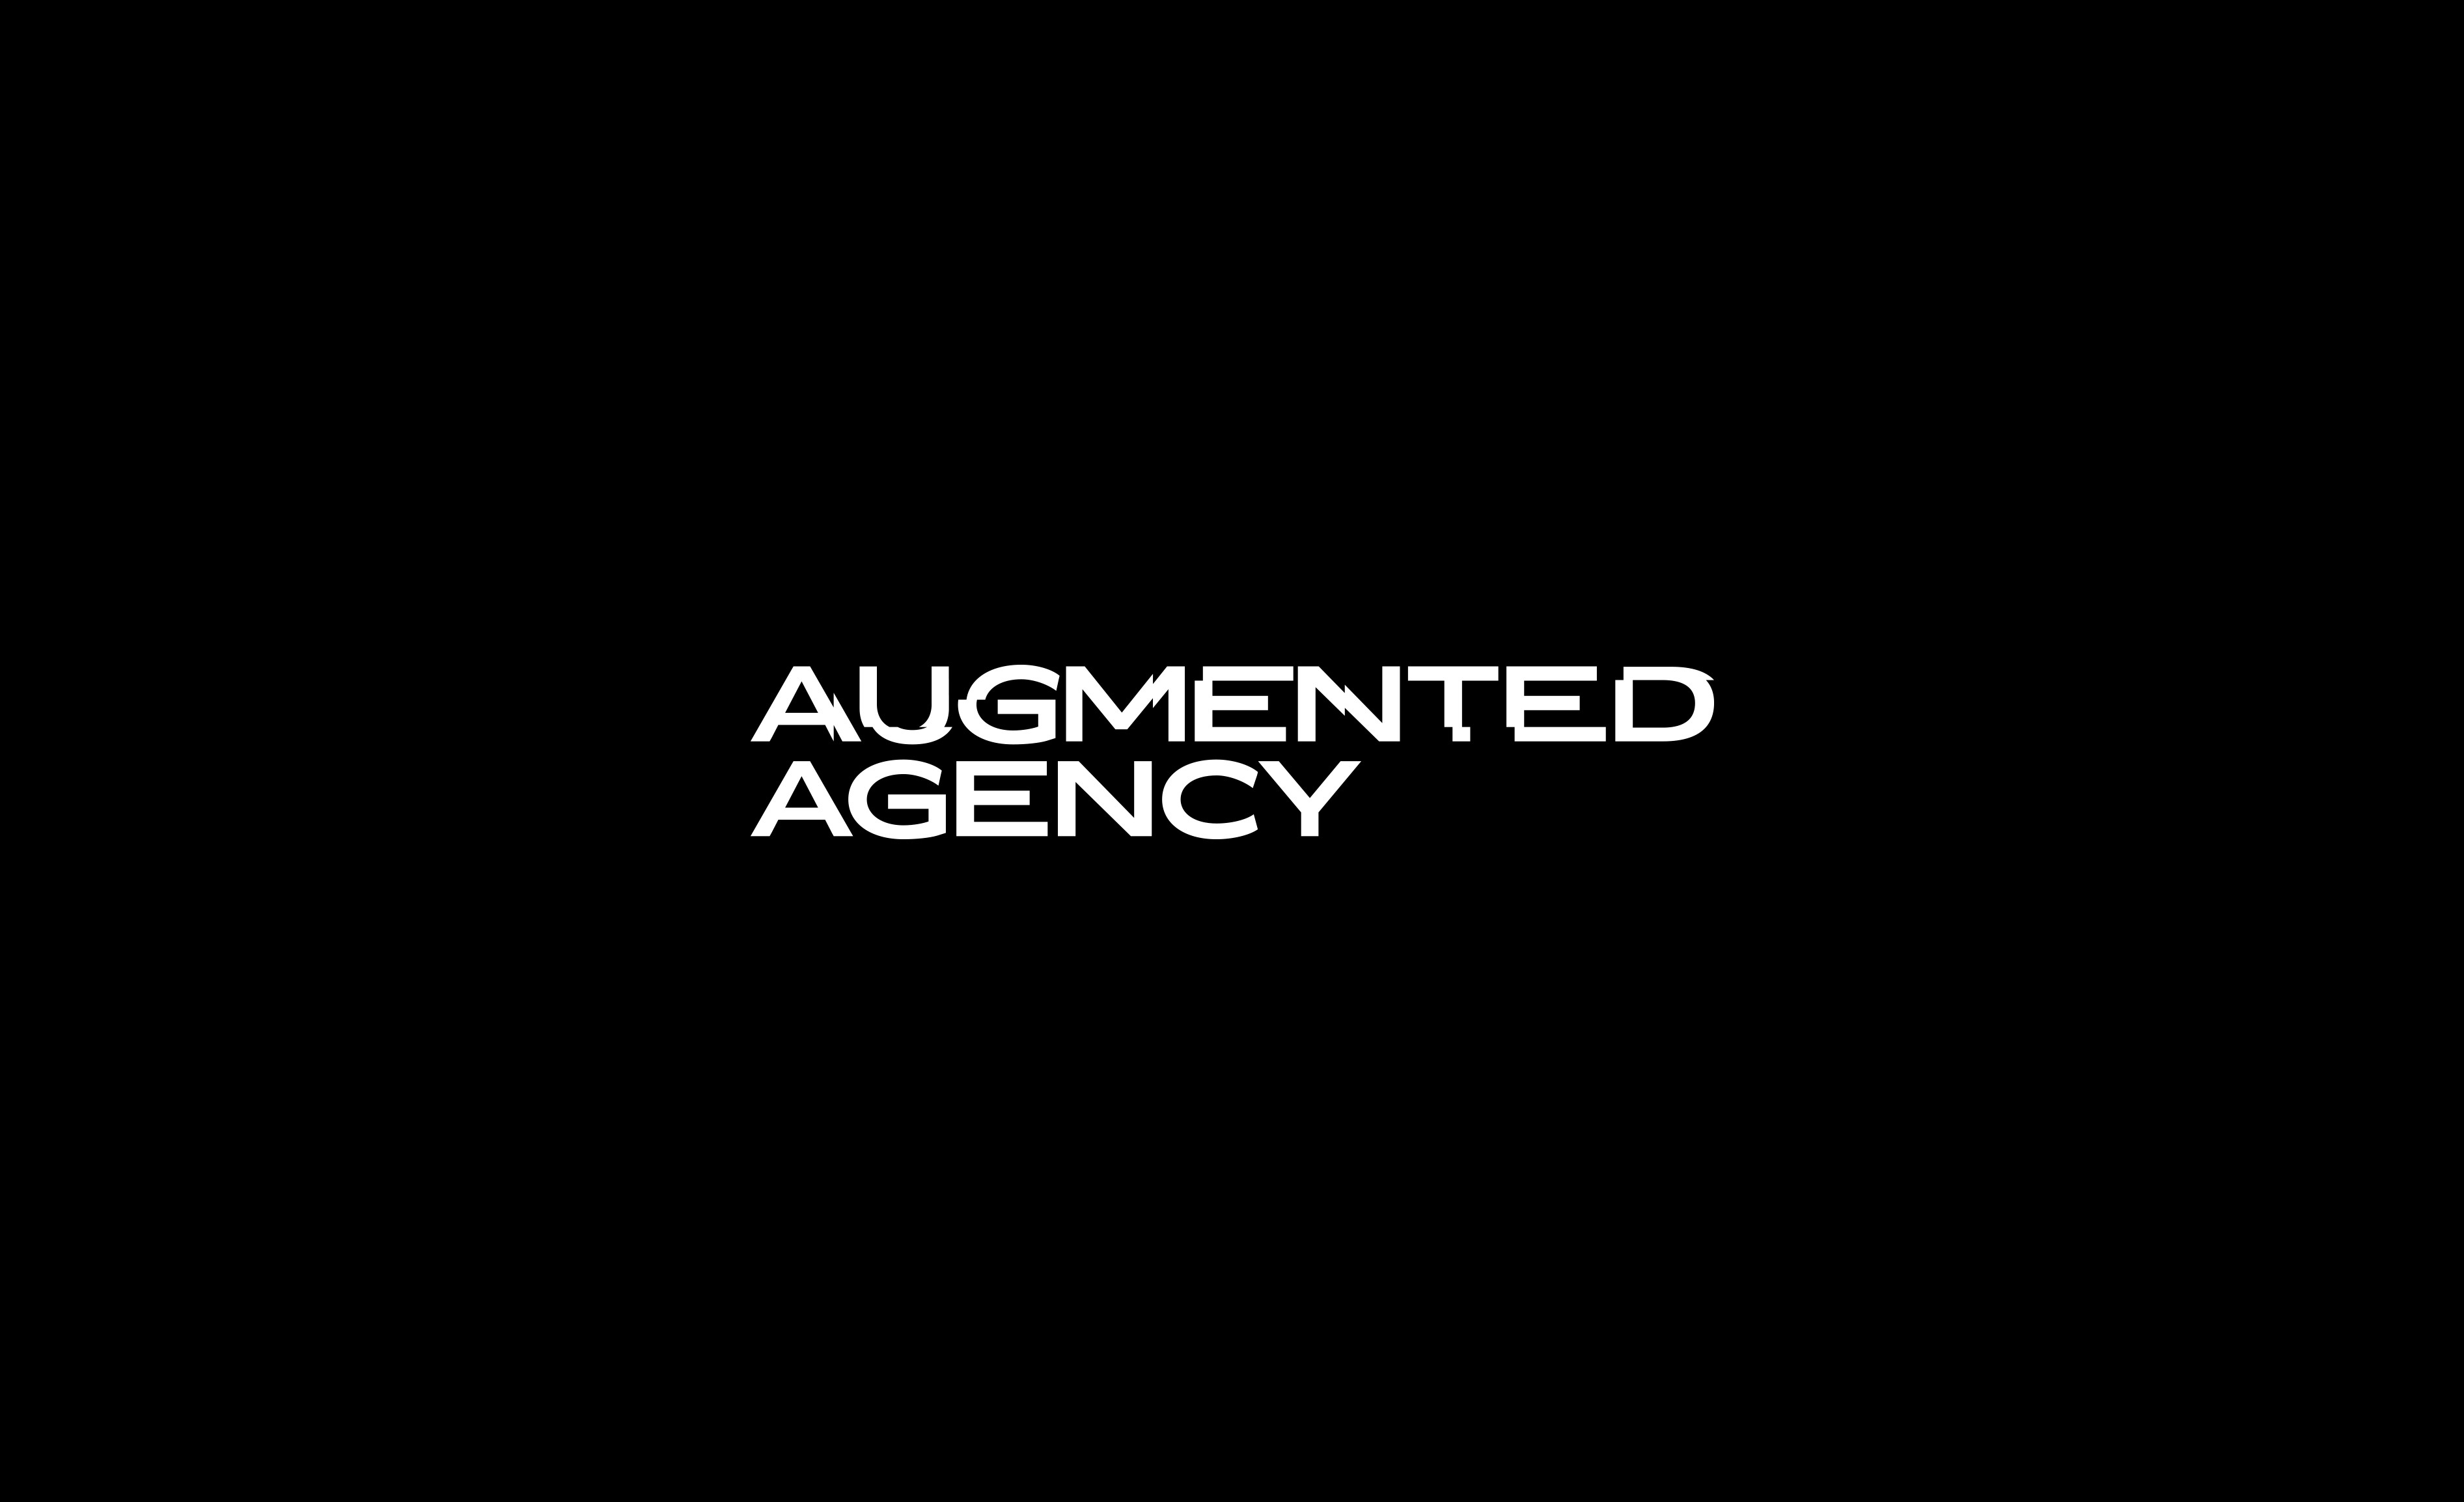 Augmented Agency wordmark logo